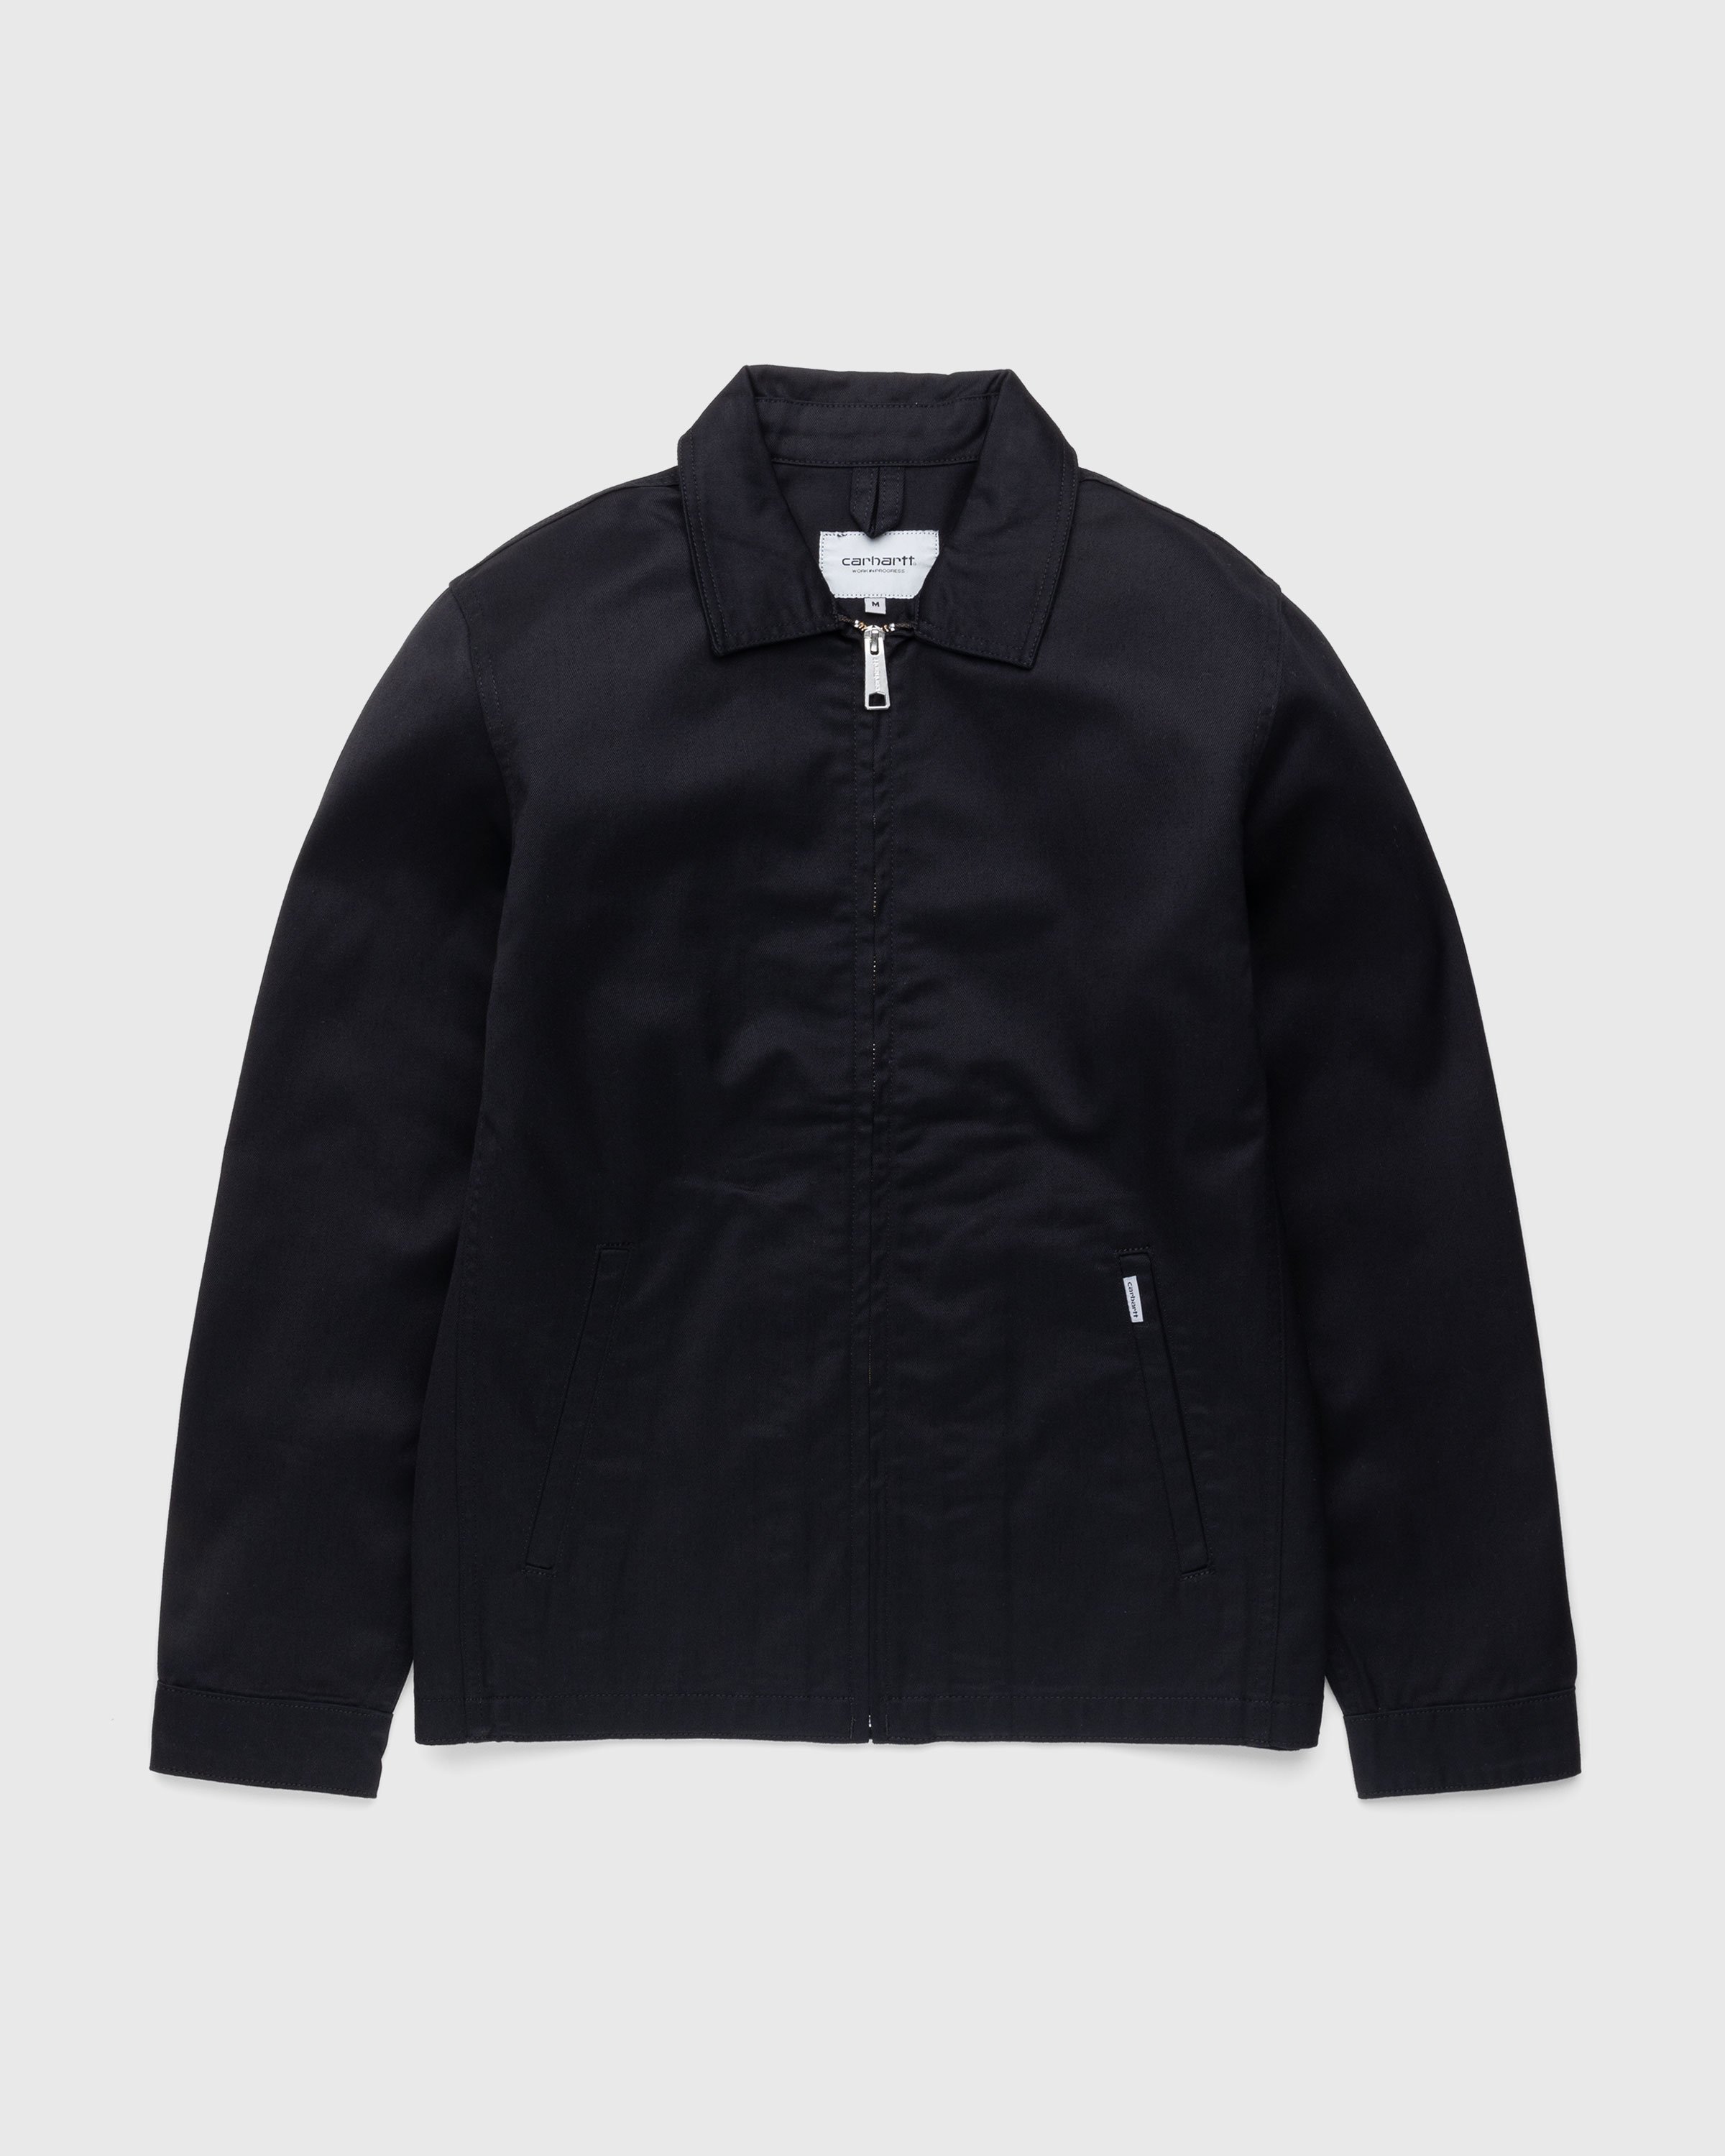 Carhartt WIP - Modular Jacket Rinsed Black - Clothing - Black - Image 1